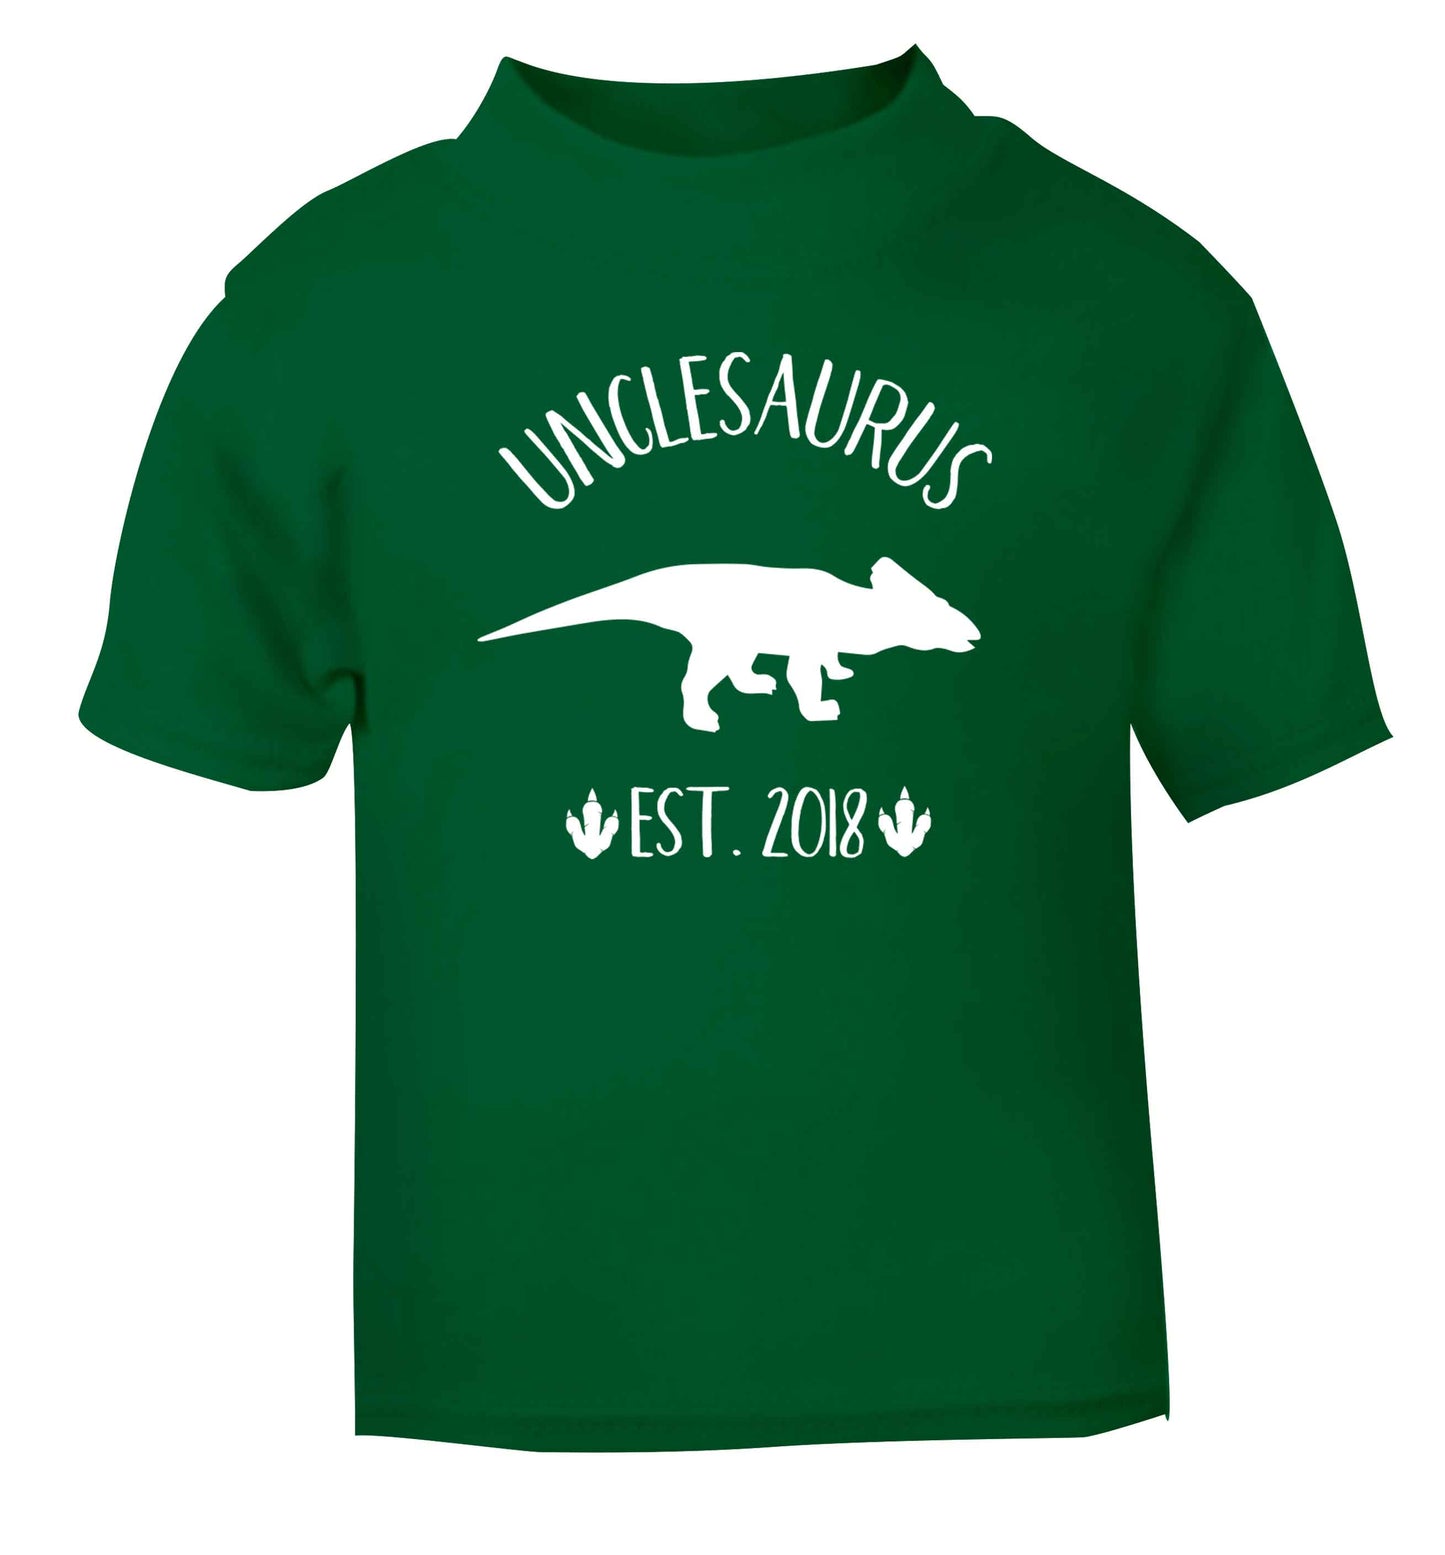 Personalised unclesaurus since (custom date) green Baby Toddler Tshirt 2 Years